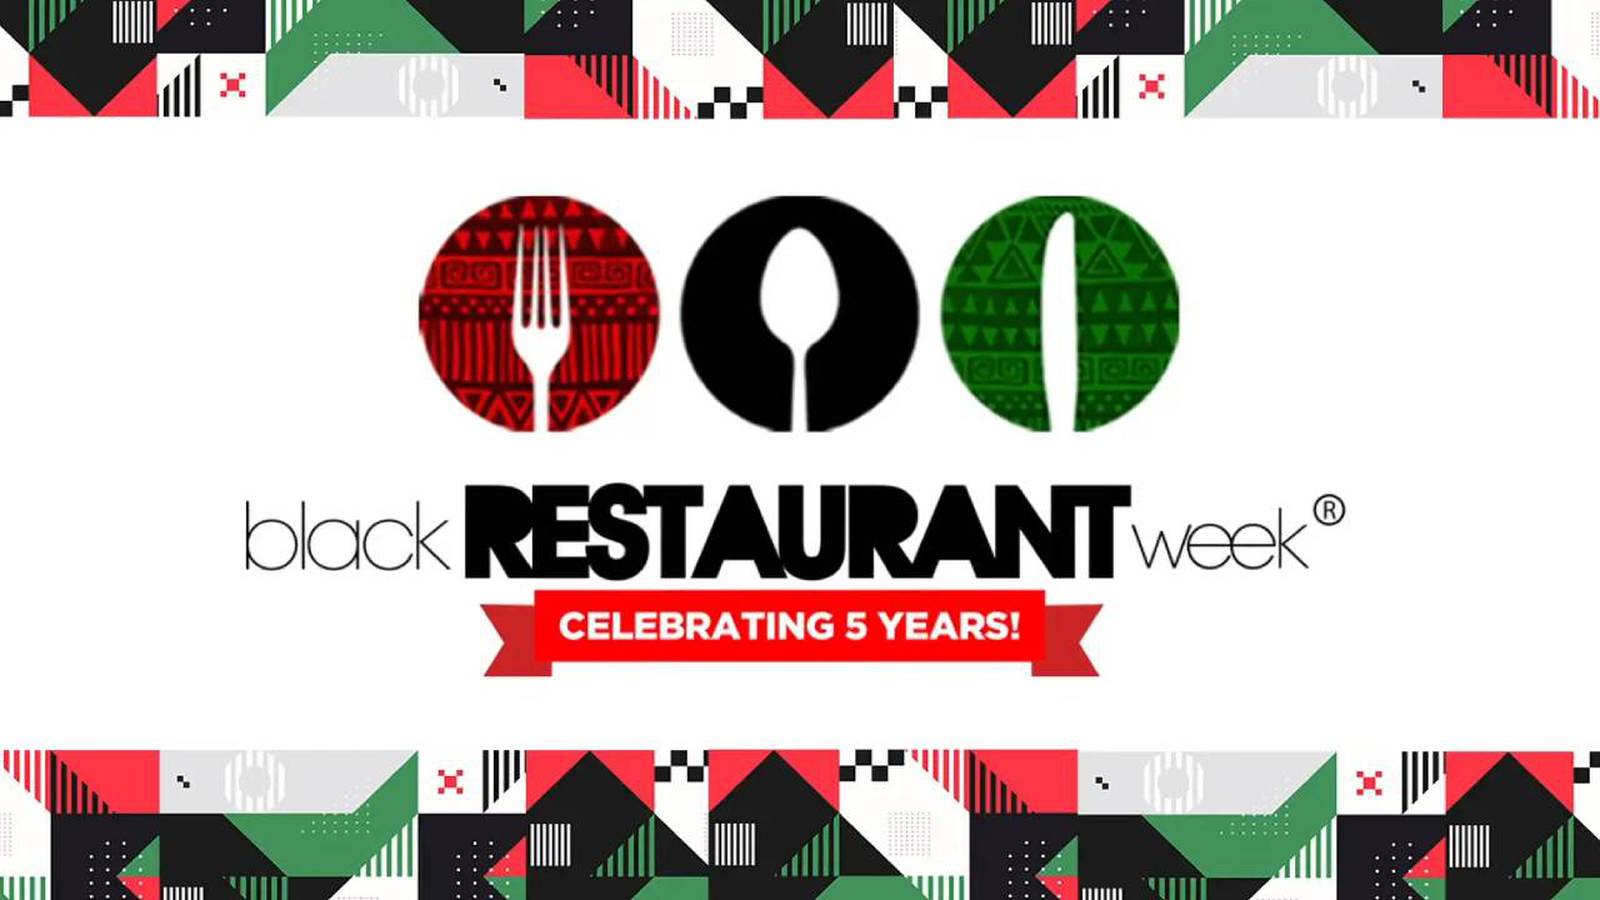 Black Restaurant Week What to know Action News Jax